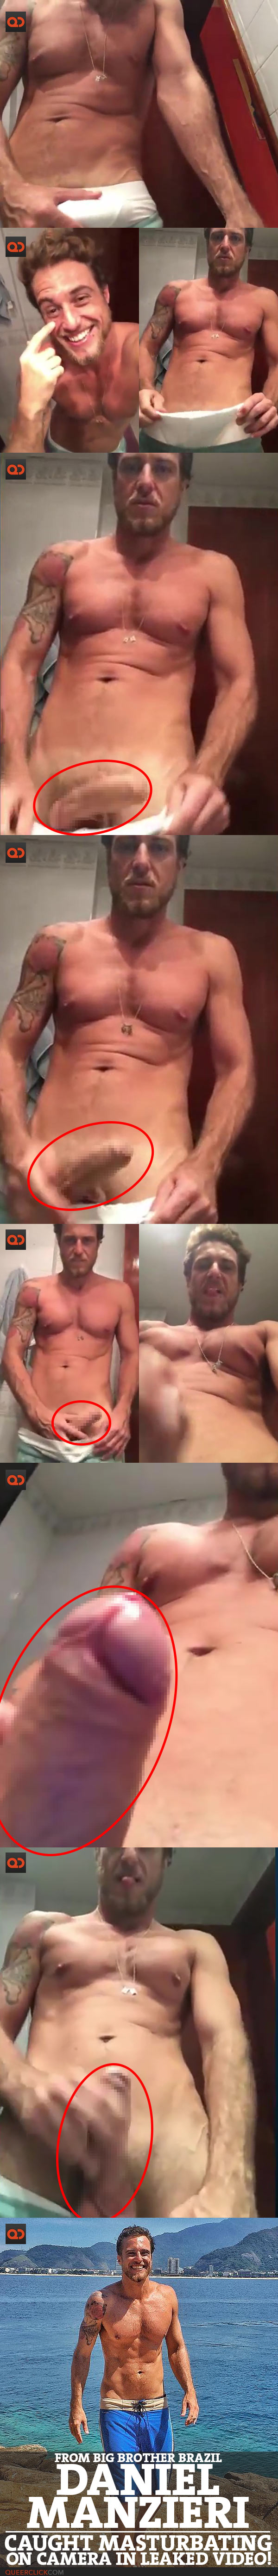 Daniel Manzieri, From Big Brother Brazil, Caught Masturbating On Camera In Leaked Video!